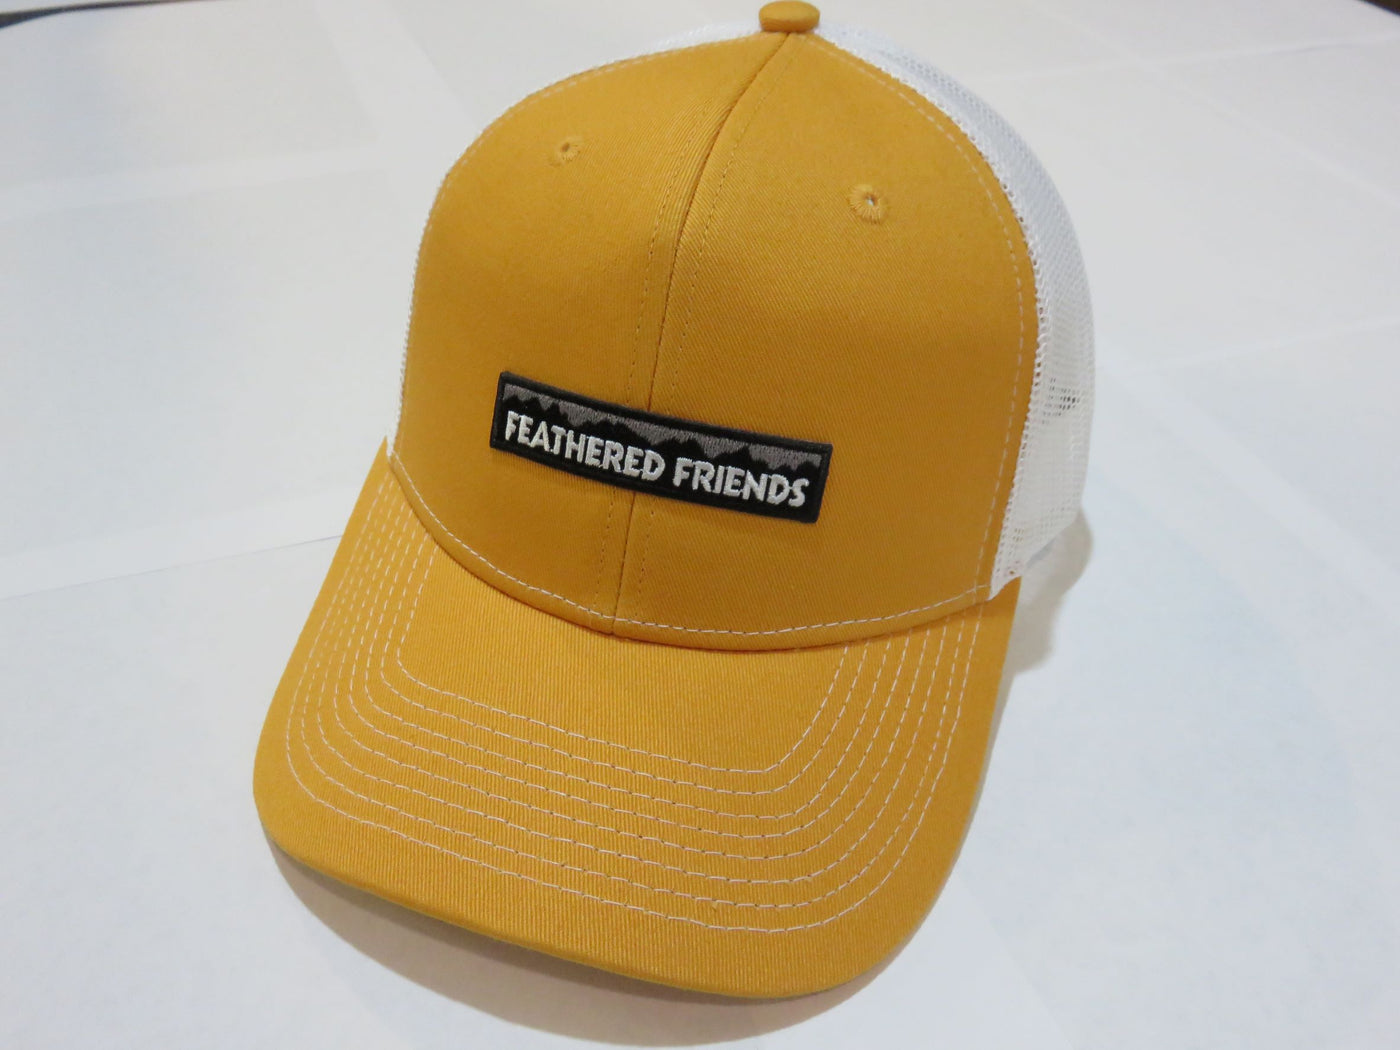 Press Friends Embroidered Hat — Press Friends